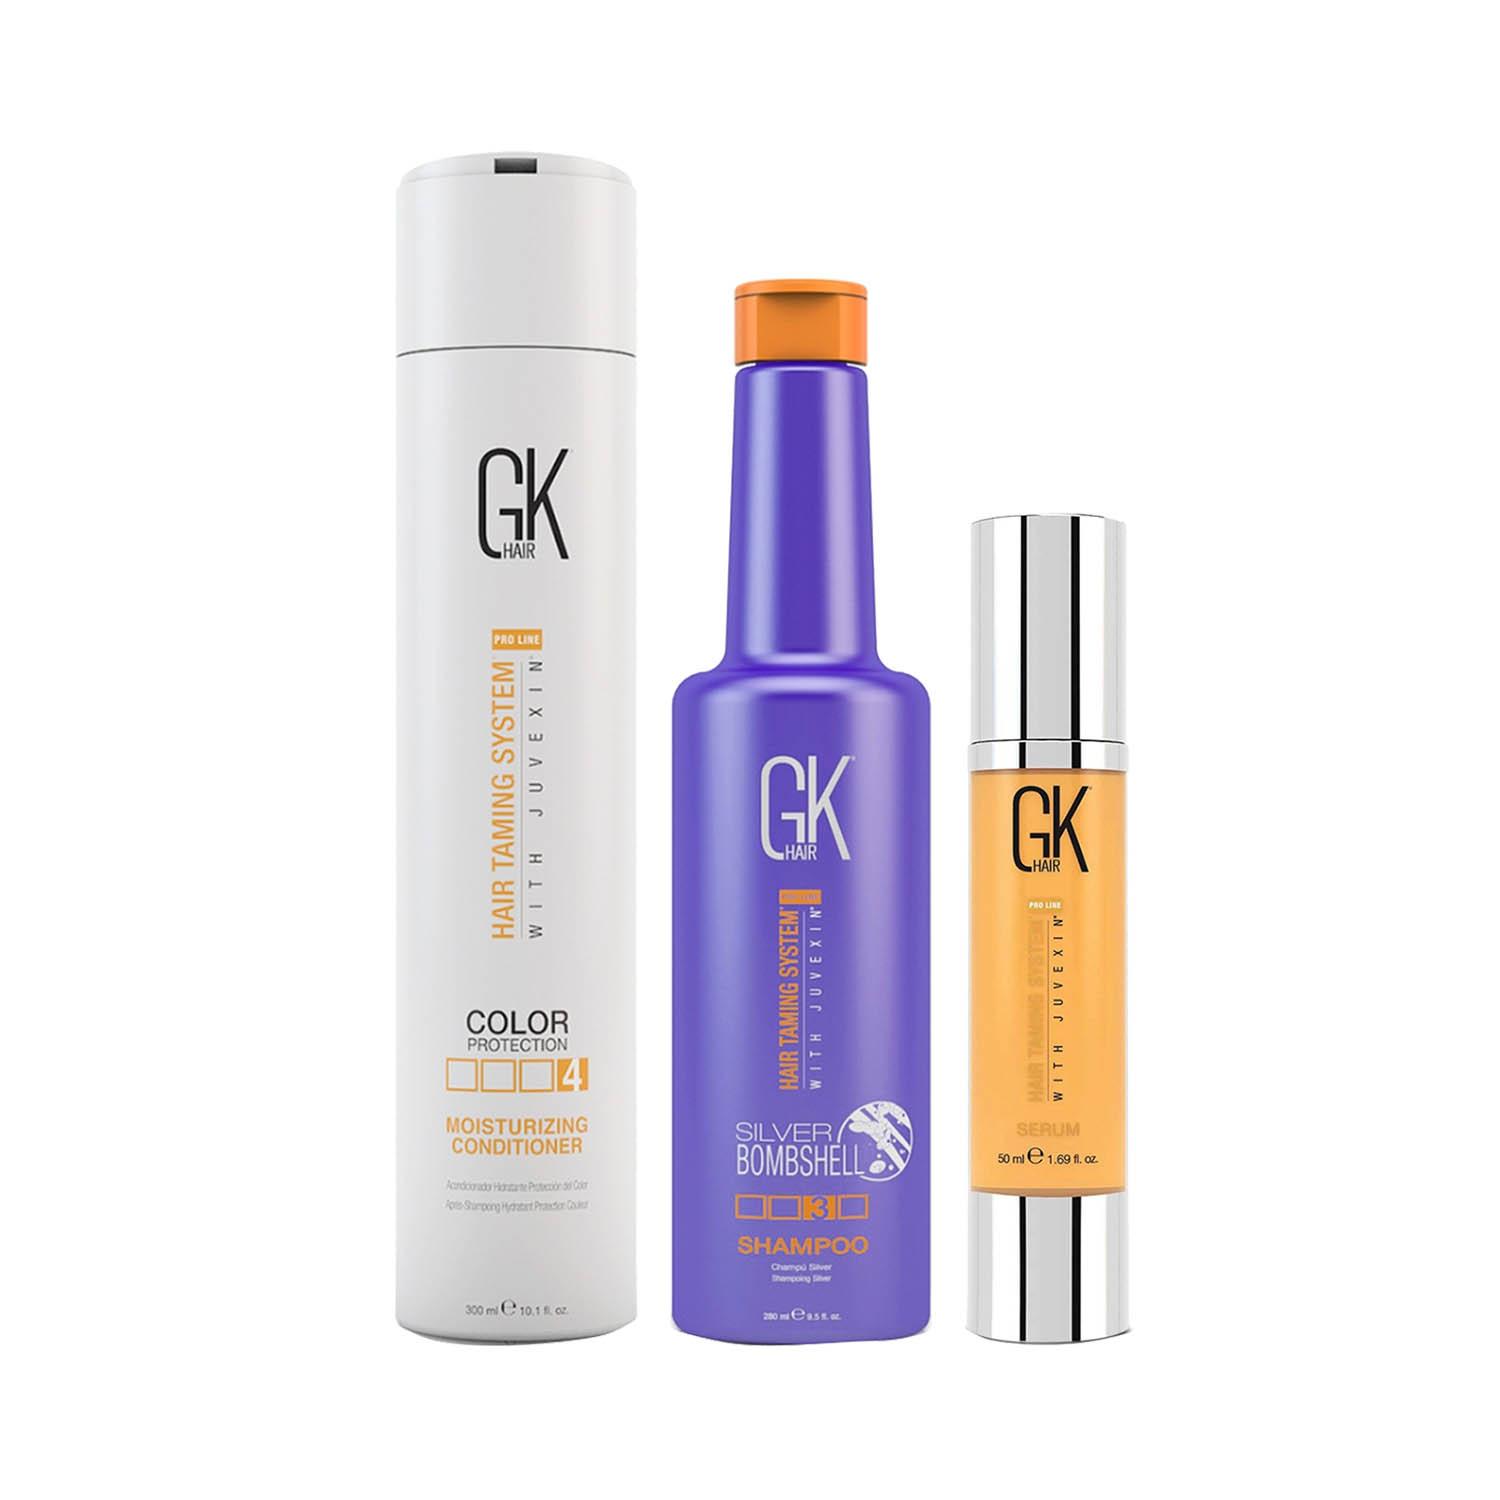 GK Hair | GK Hair Silver Bombshell Shampoo (280ml) with Moisturizing Conditioner (300ml) Serum (50ml) Combo